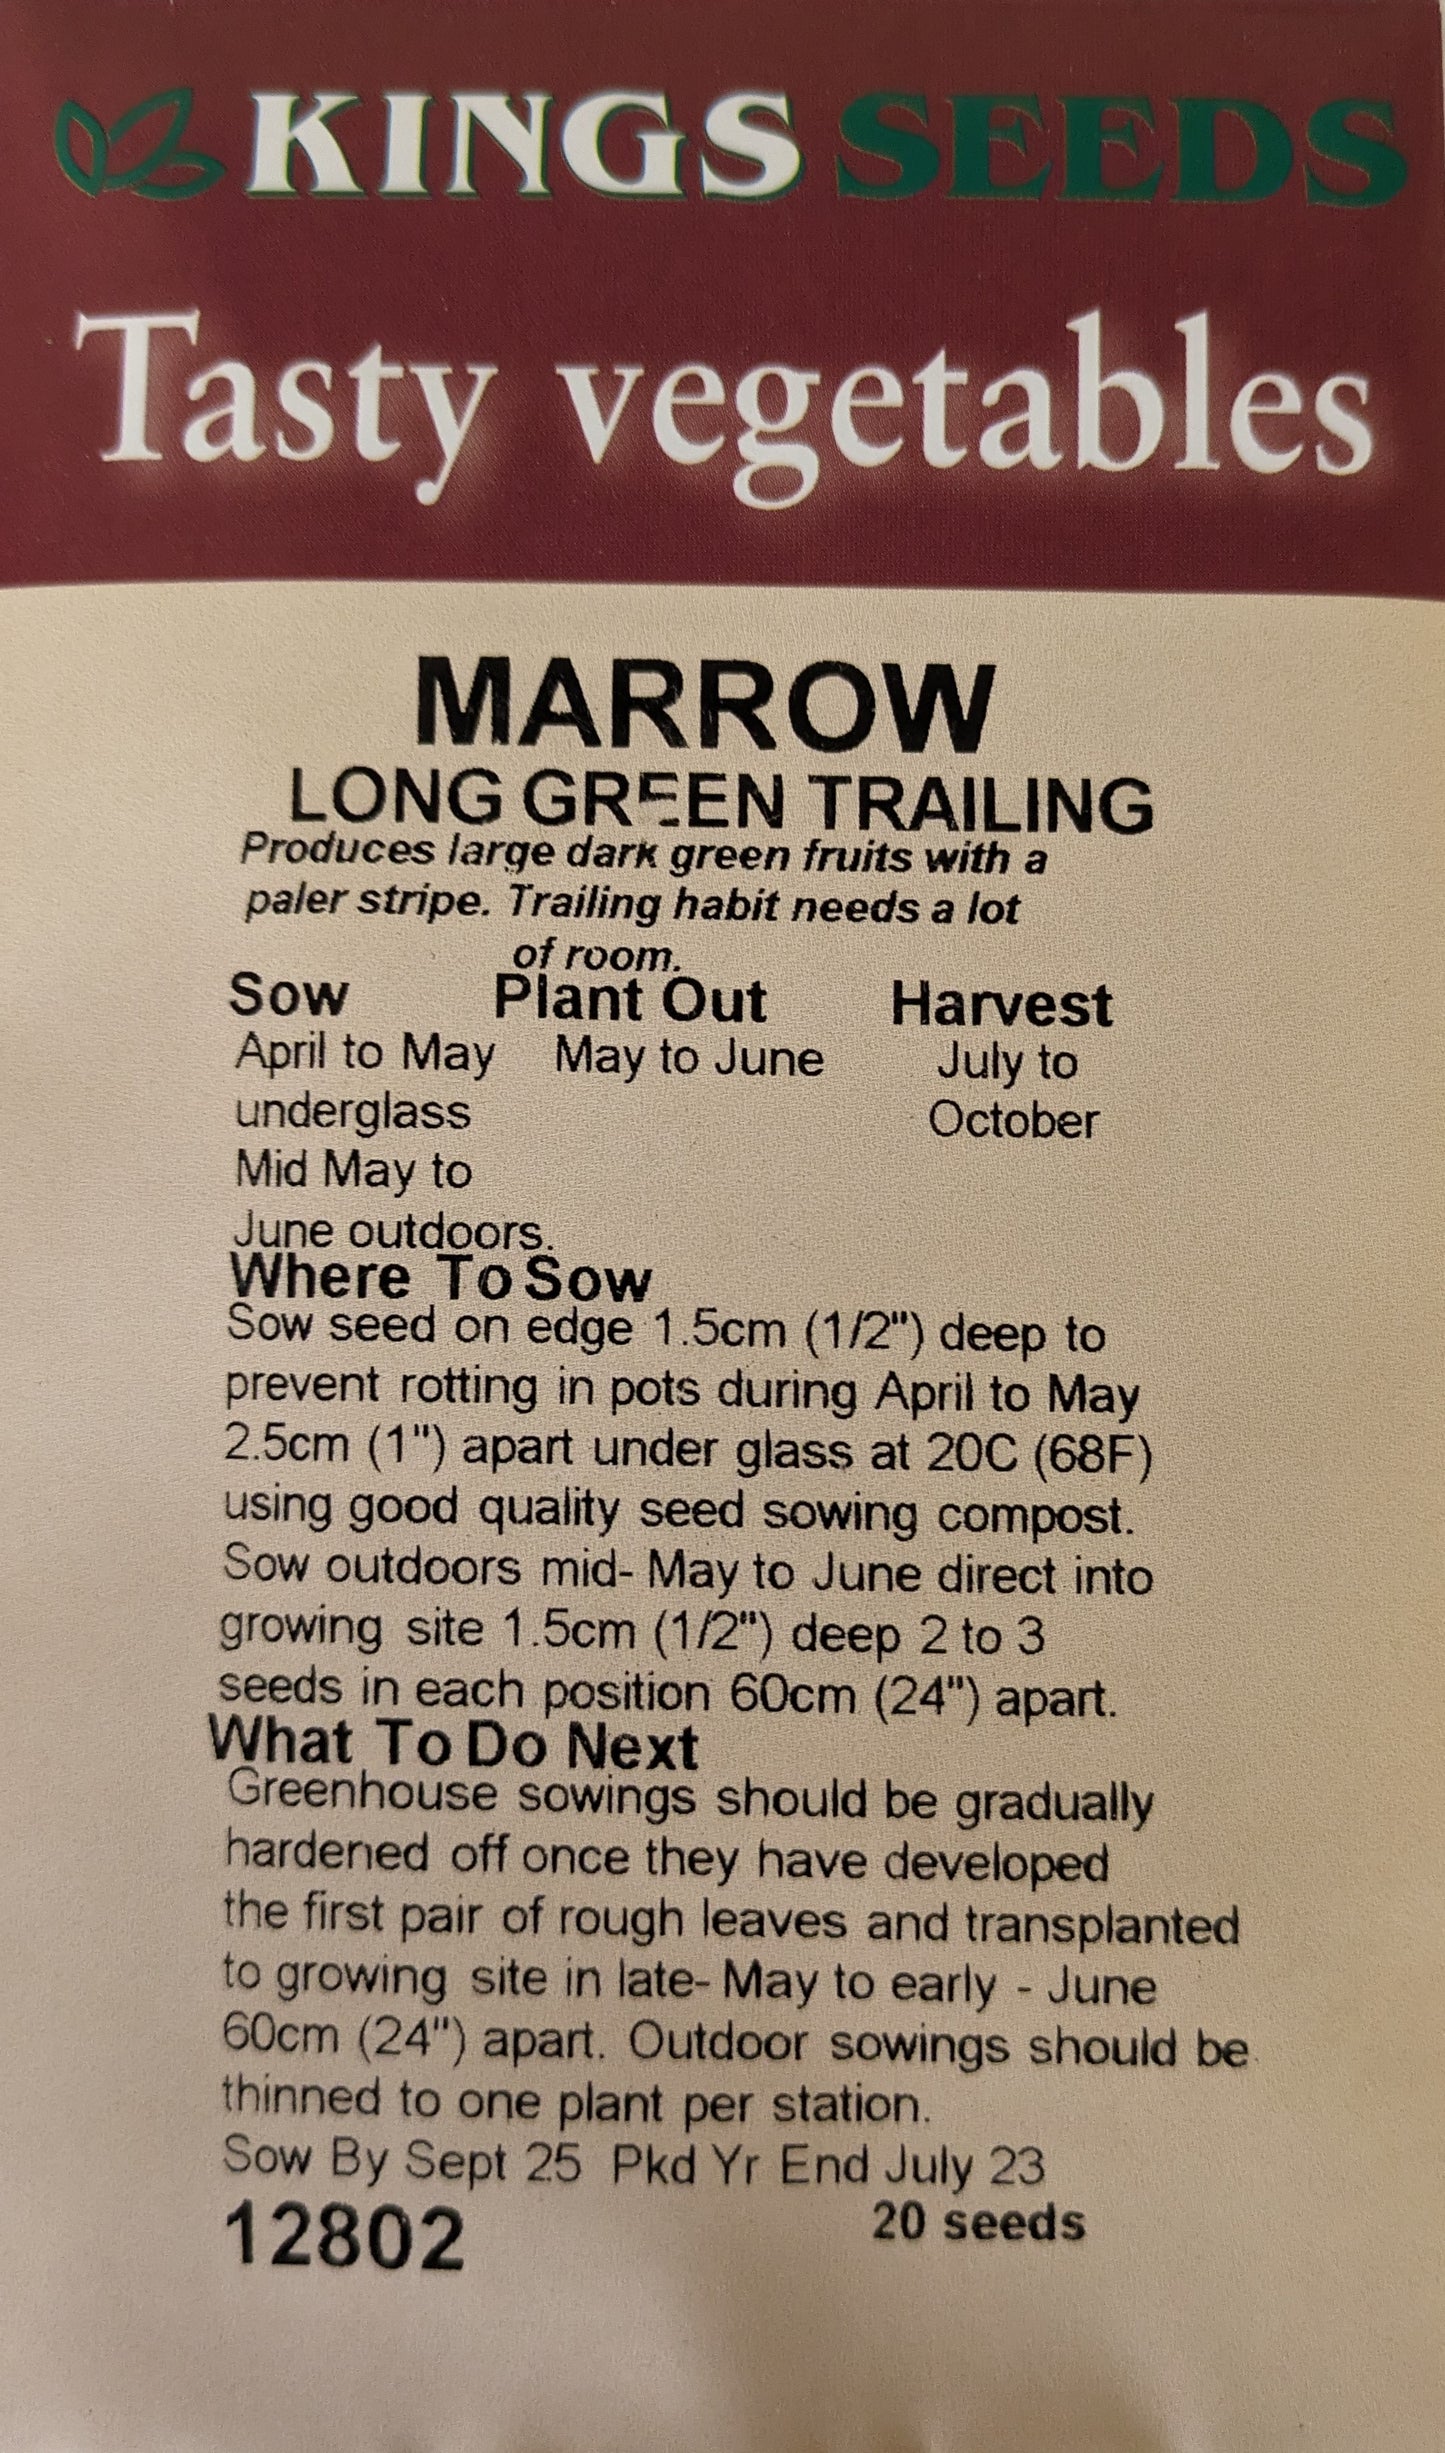 Kings Seeds Marrow Long Green Trailing